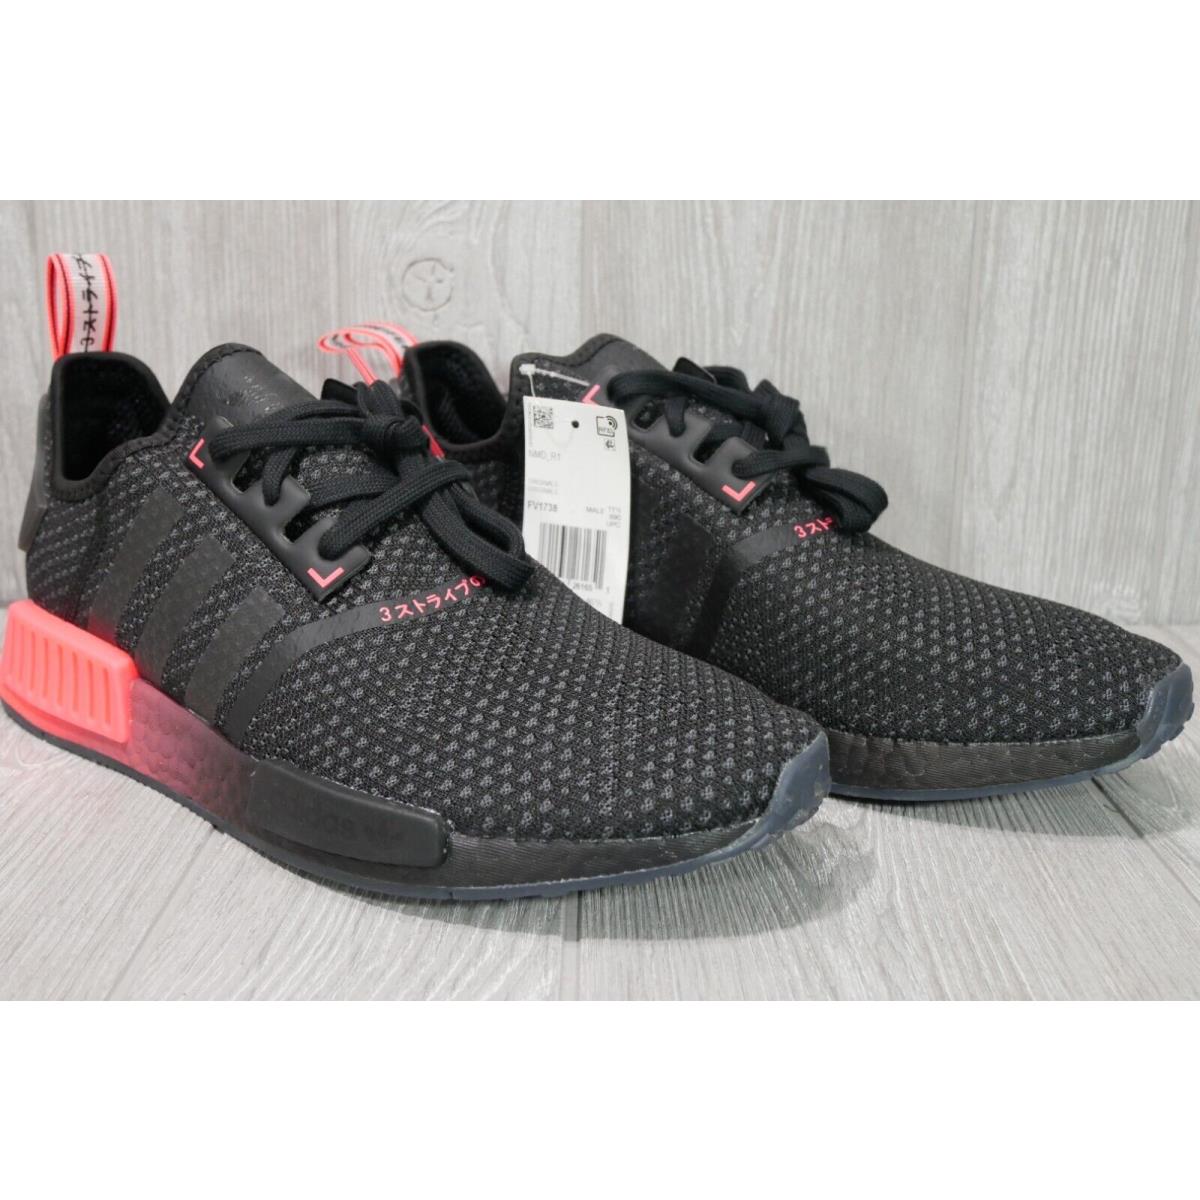 Adidas shoes NMD - Black 1